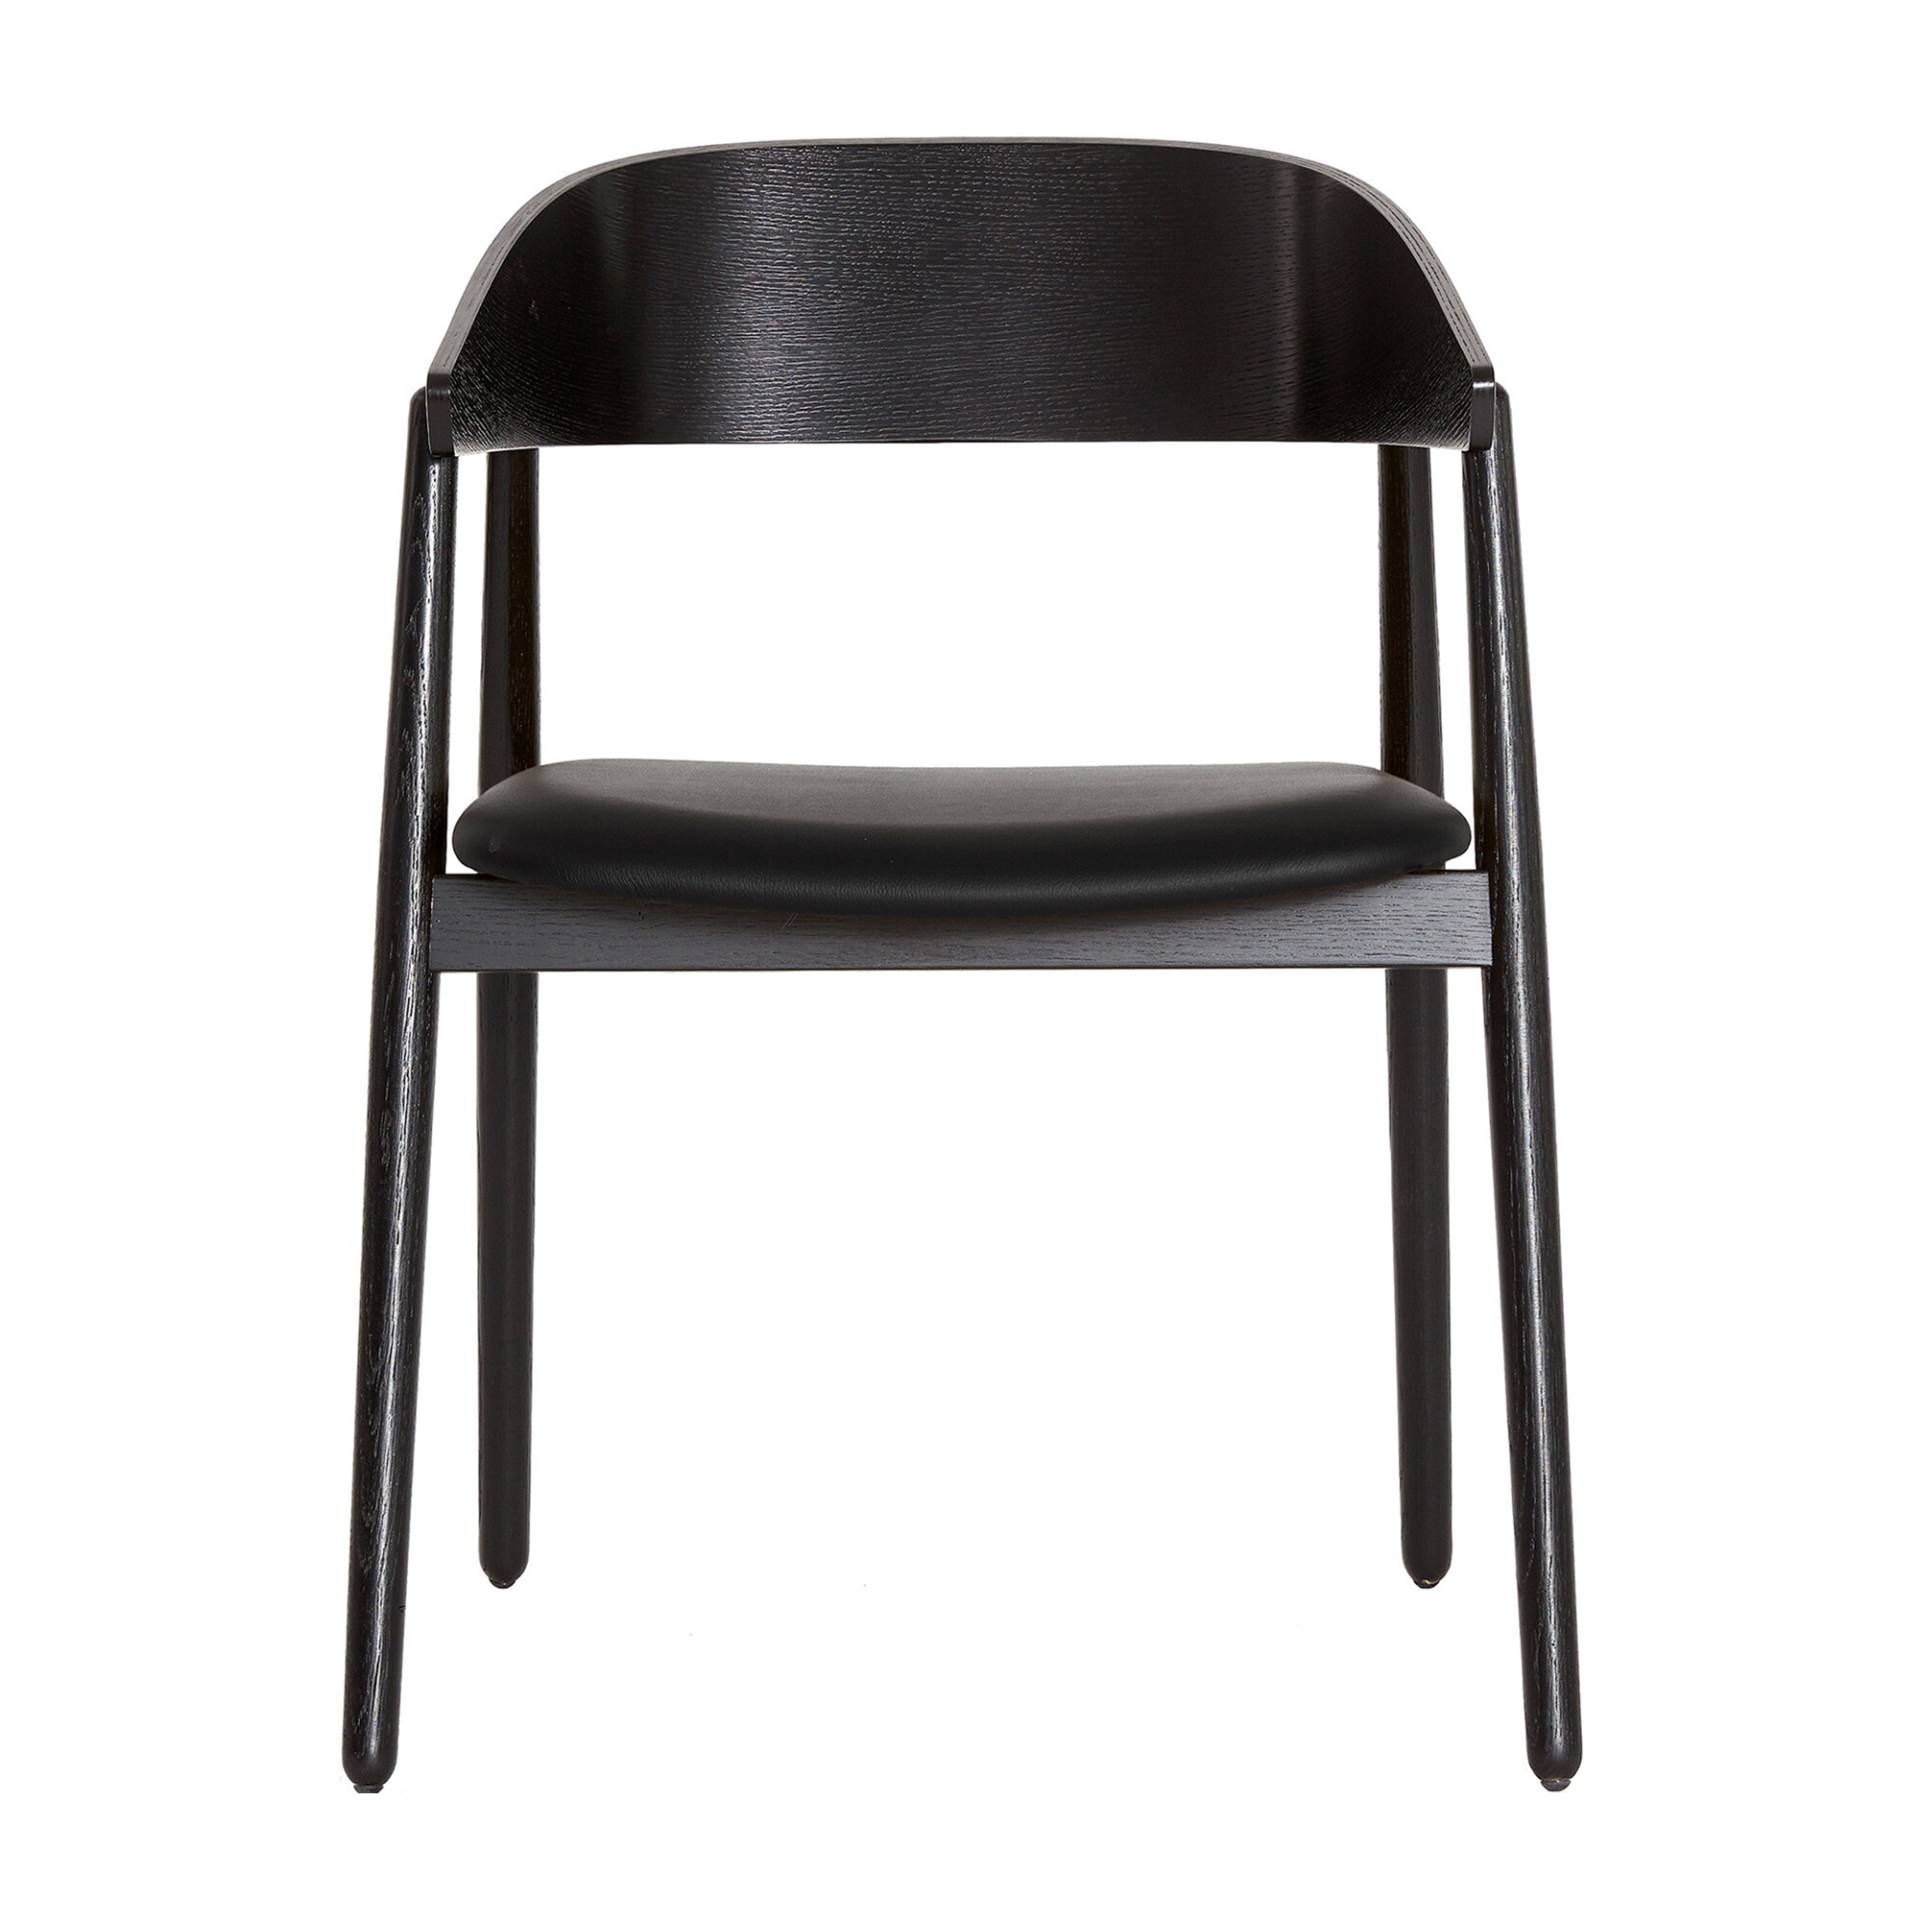 Andersen Furniture - AC2 Armlehnstuhl Leder - eiche schwarz/lackiert/BxHxT 58x74x53cm/Sitzfläche Leder schwarz von Andersen Furniture